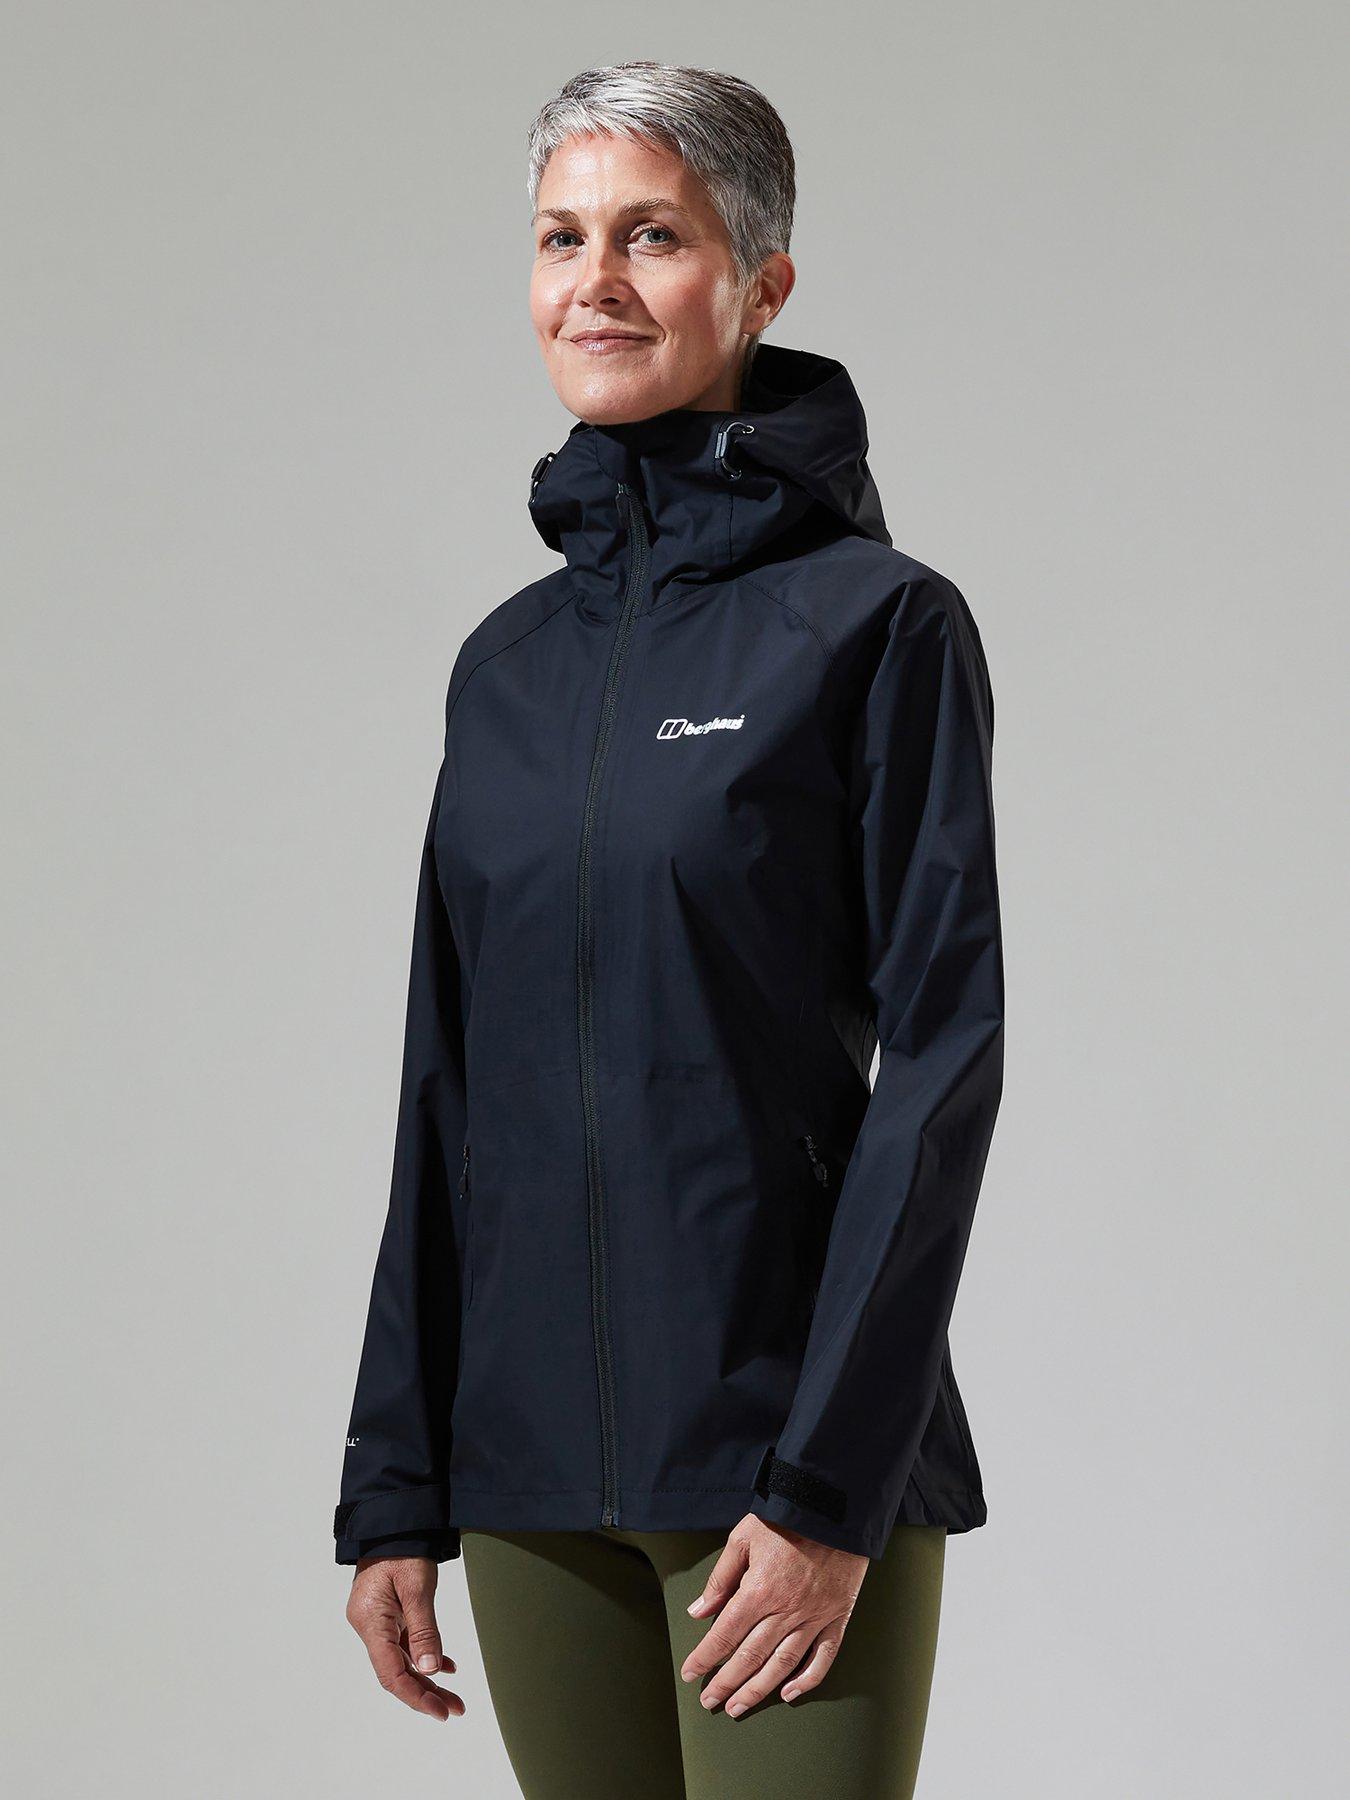 DKNY Womens Rain Coat-3 Colors! SALE 70% off 0 Retail!